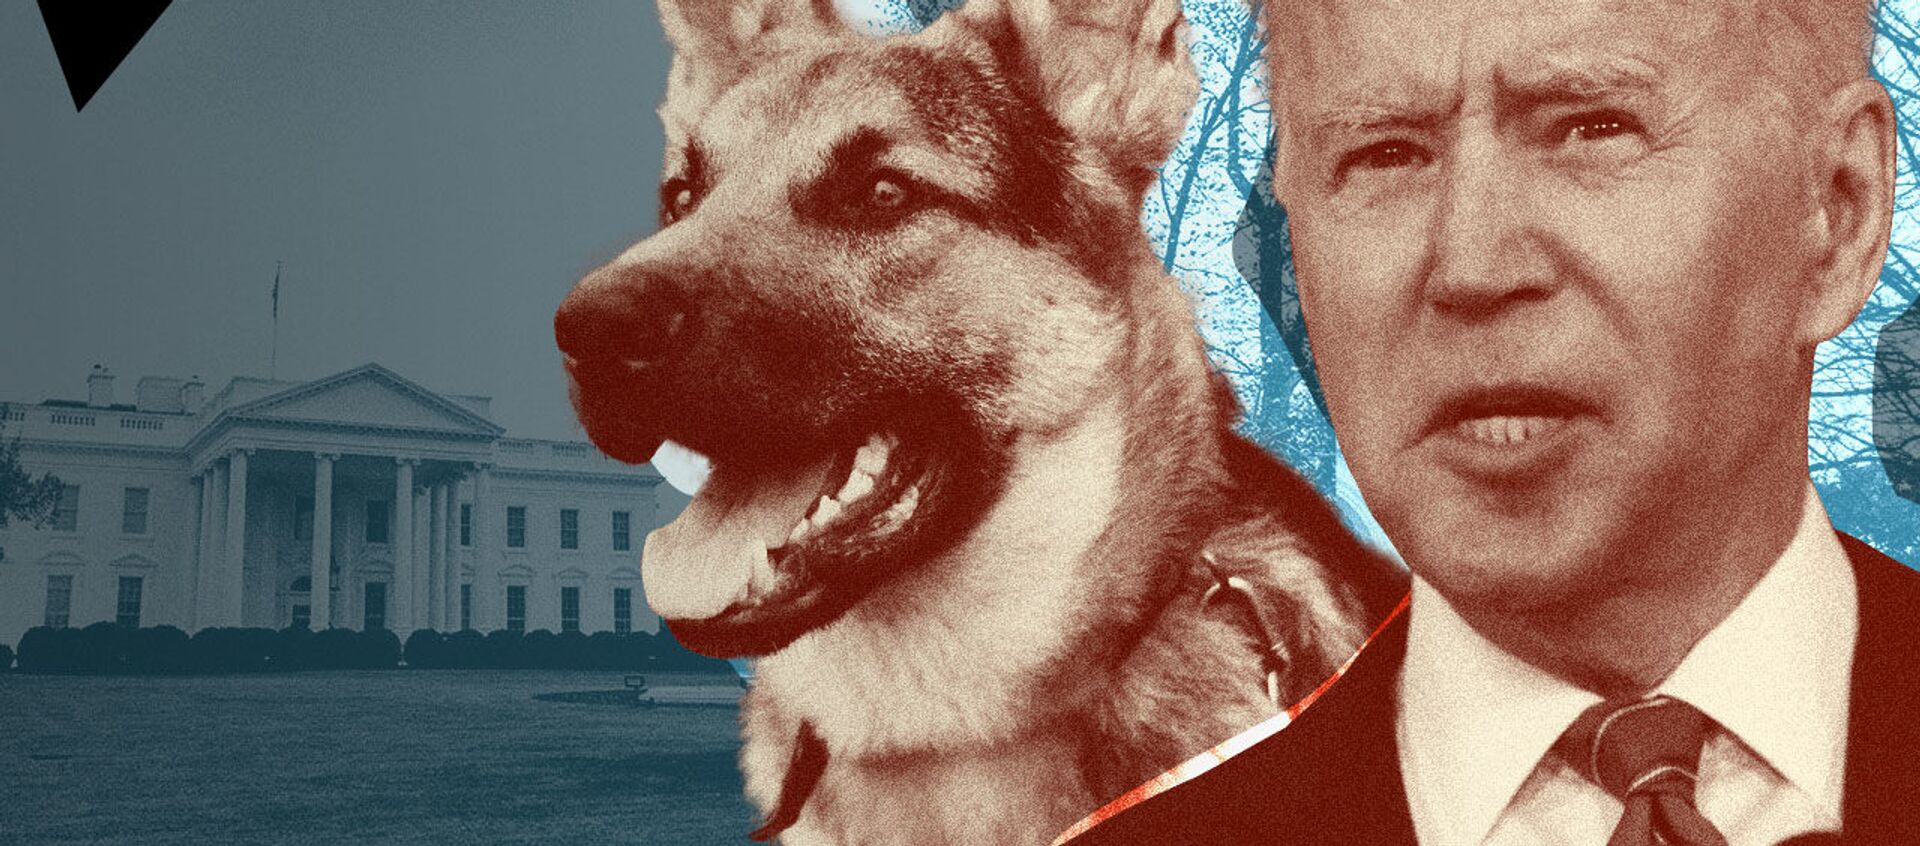 Собака Джо Байдена терроризирует сотрудников Белого дома - видео - Sputnik Грузия, 1920, 06.04.2021